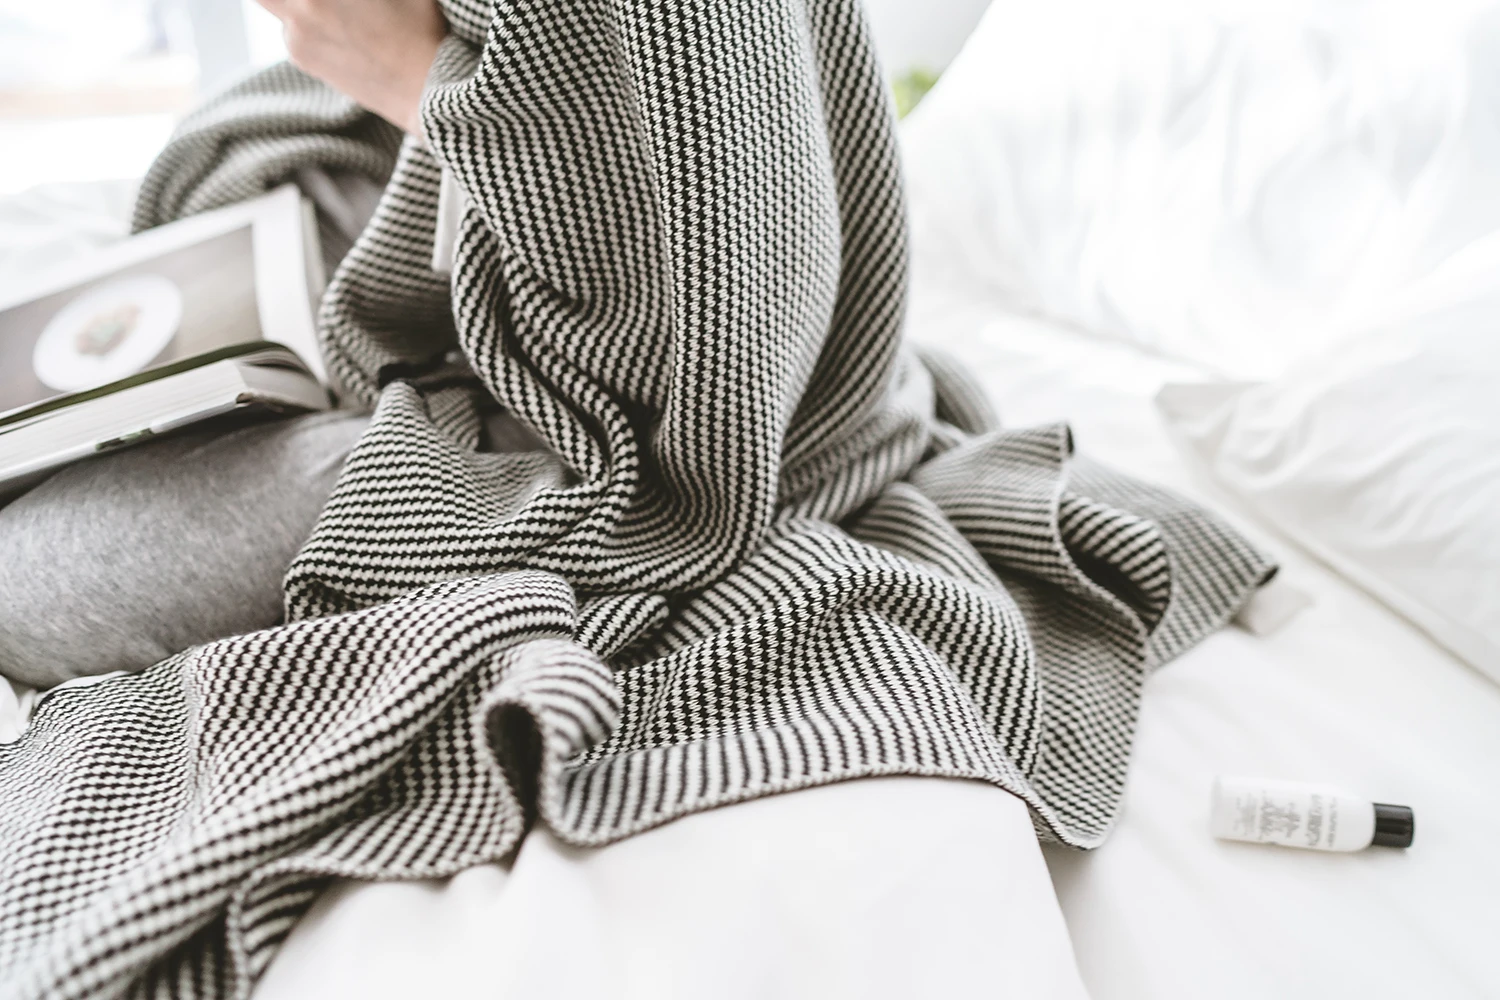 Classic black and white texture tassel plaid cotton blanket